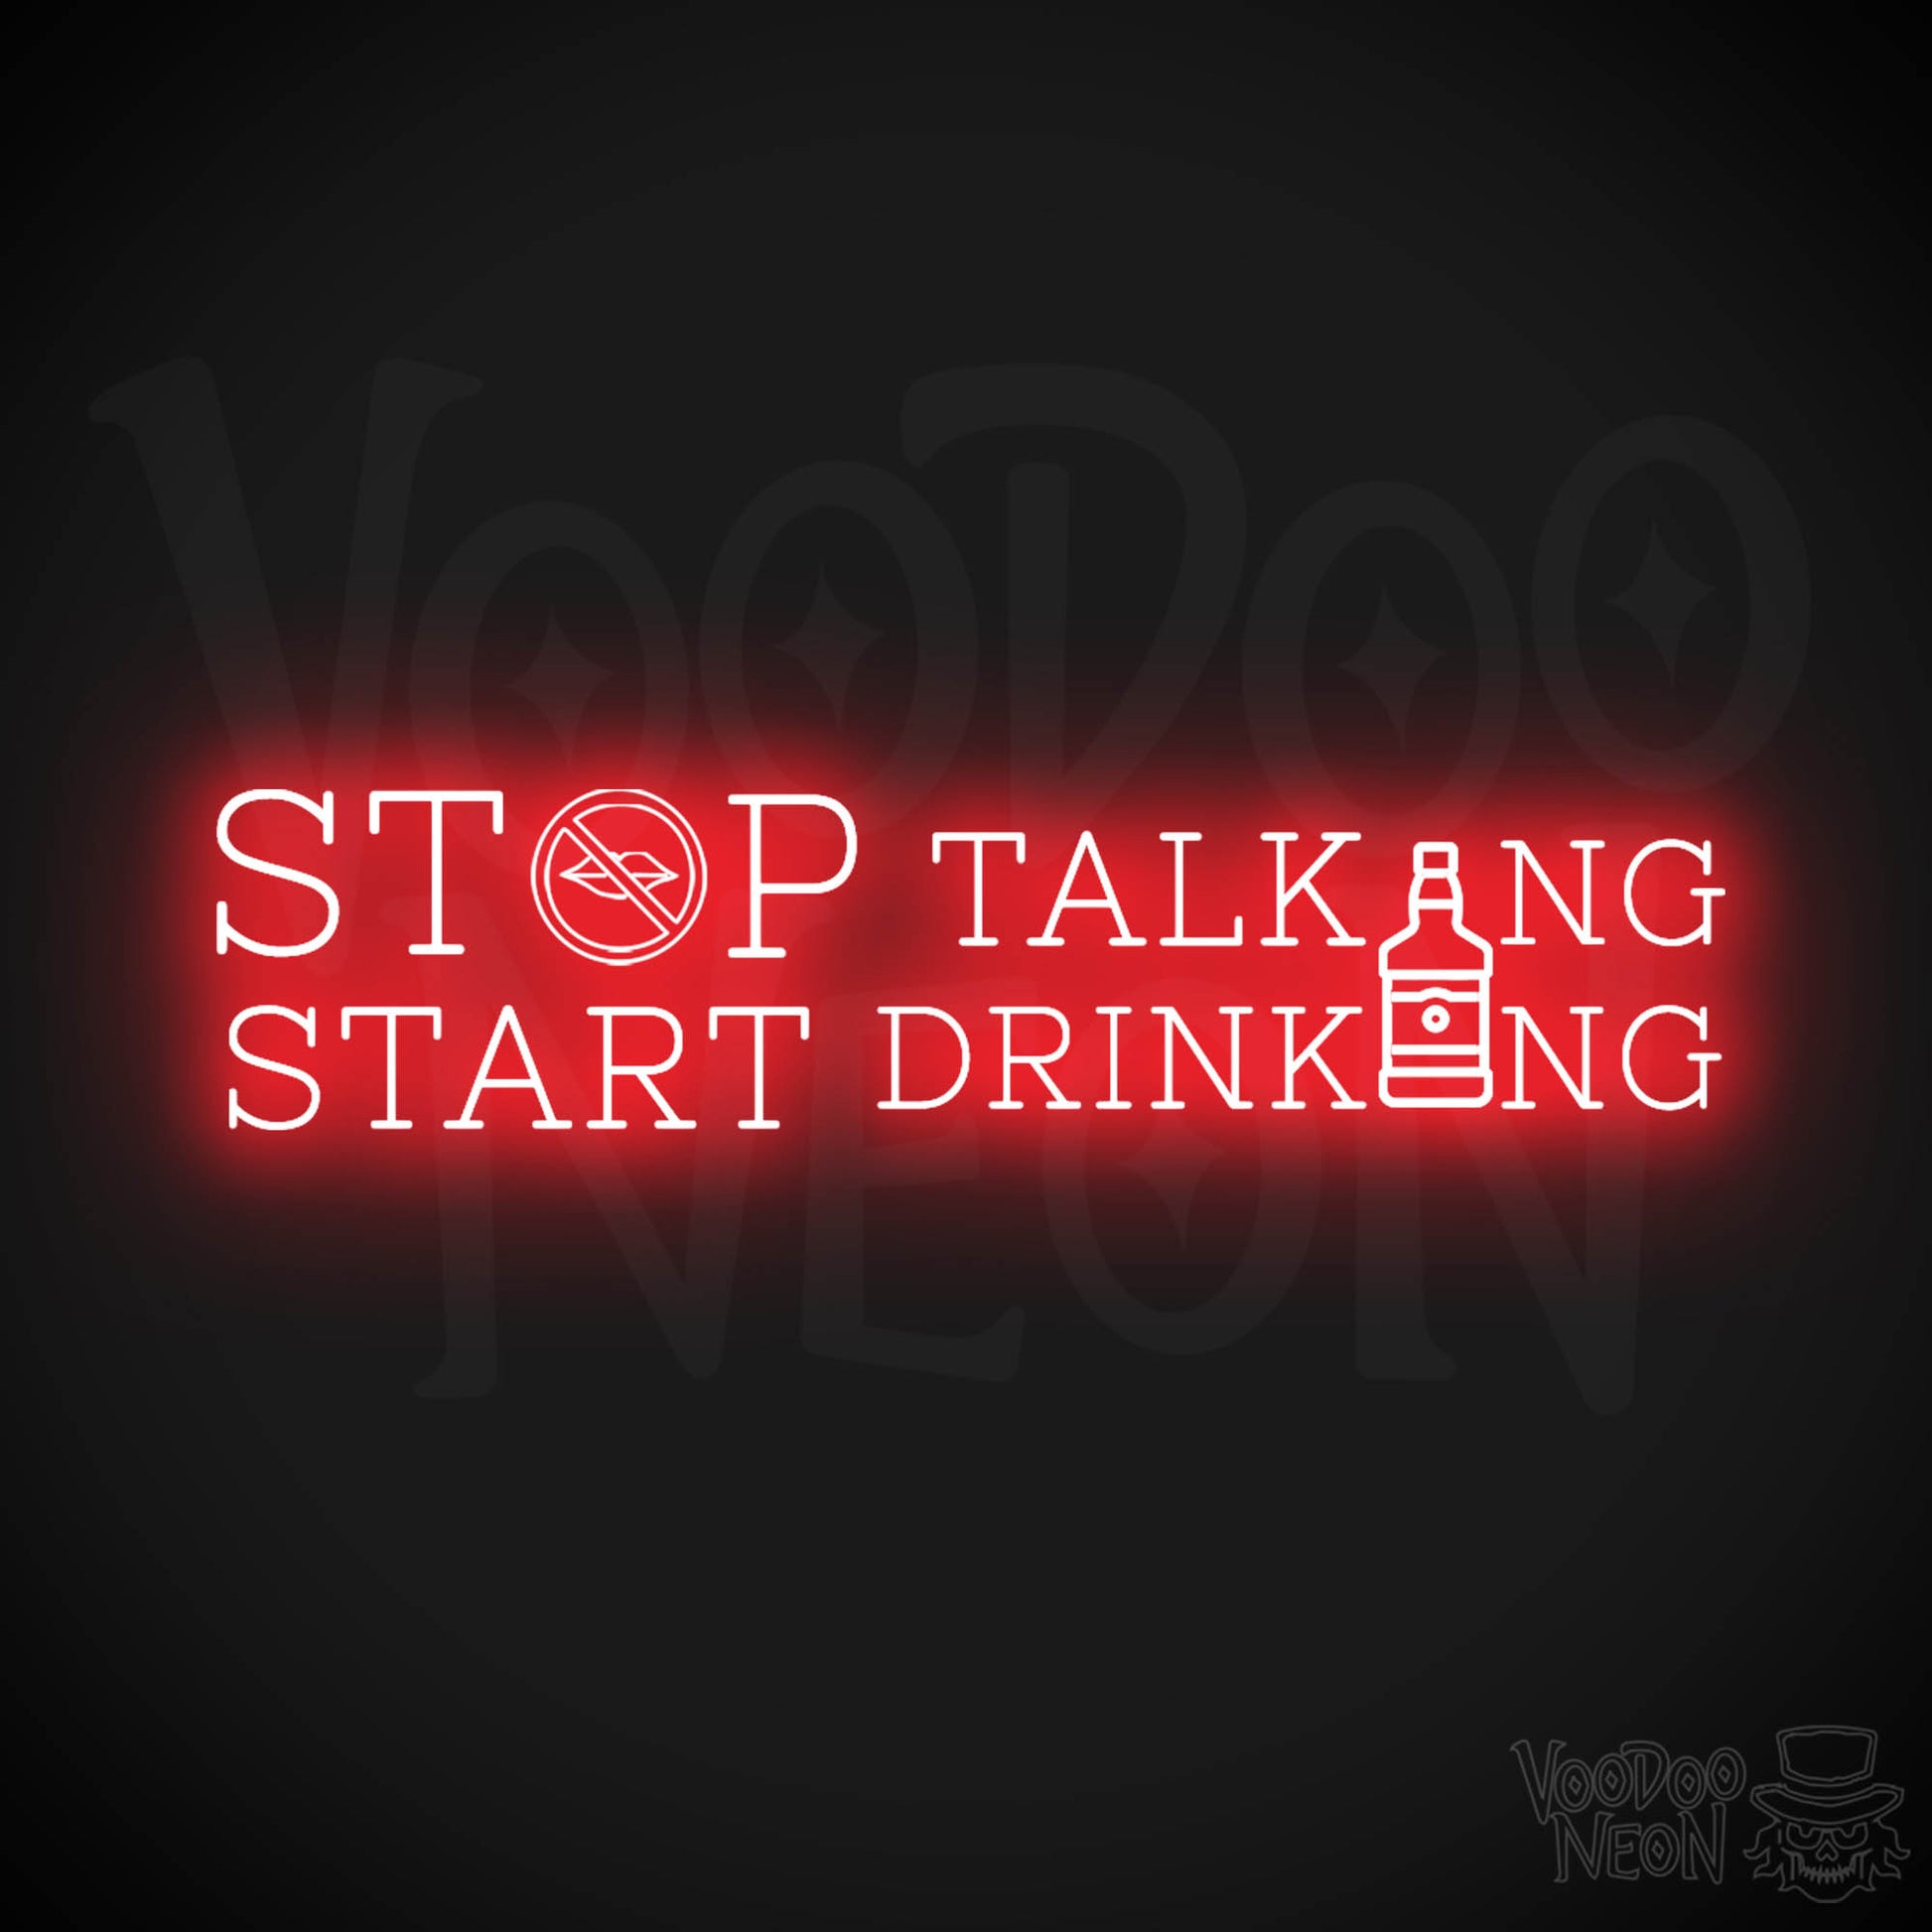 Stop Talking Start Drinking Neon Sign - Stop Talking Start Drinking Sign - Color Red